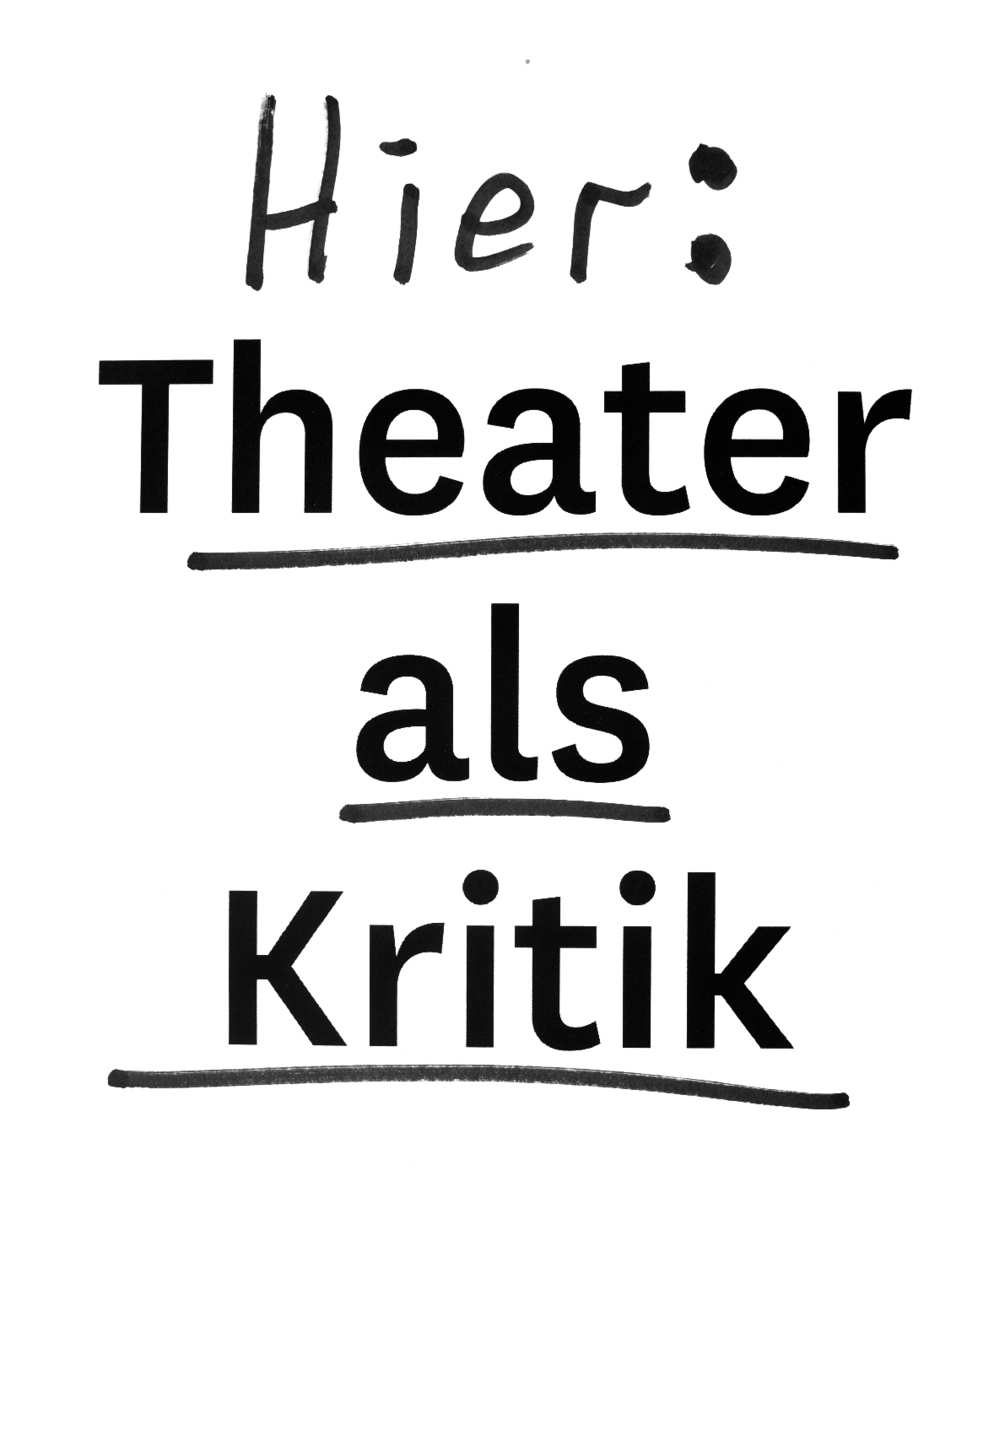 theater-as-critique-slip-07-1005x1435px